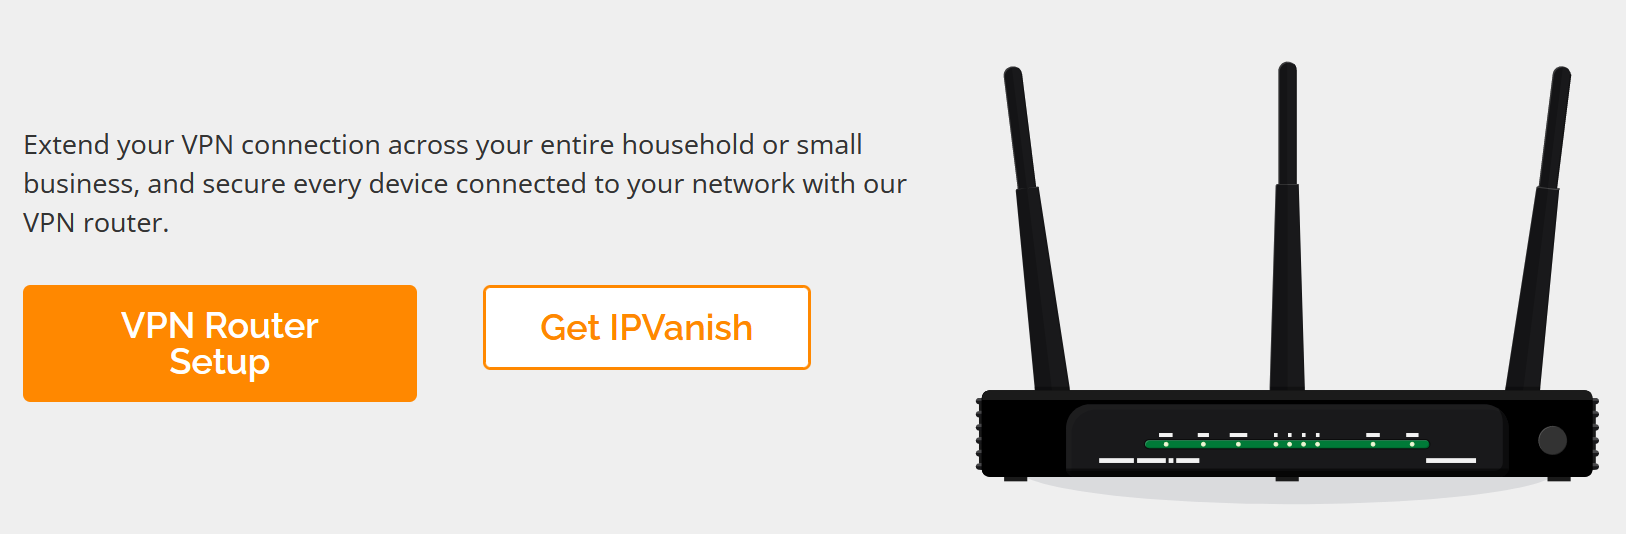 Get IPVanish for Router